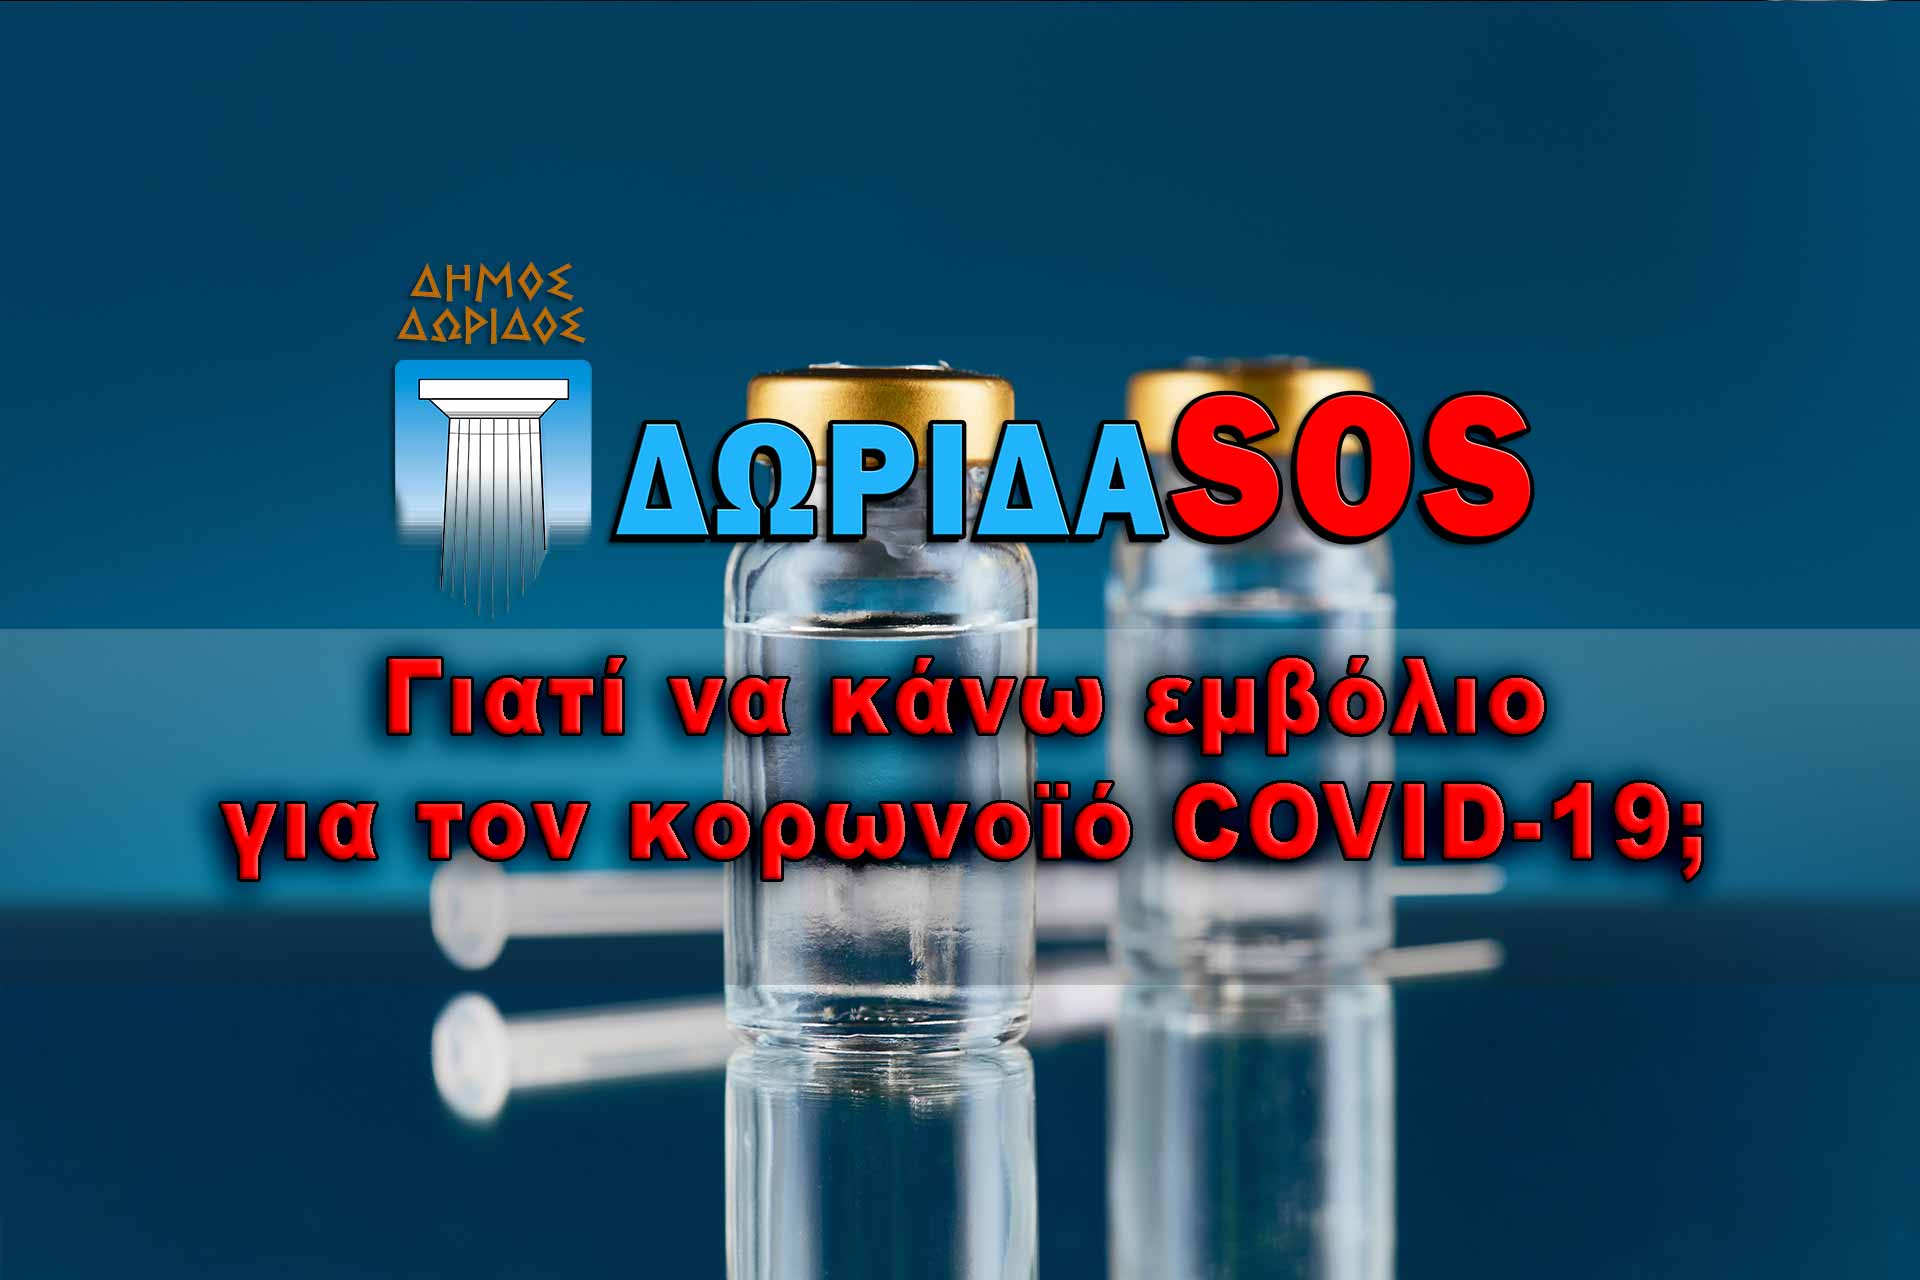 Dorida-SOS Γιατί να κάνω εμβόλιο για τον κορωνοϊό COVID-19;